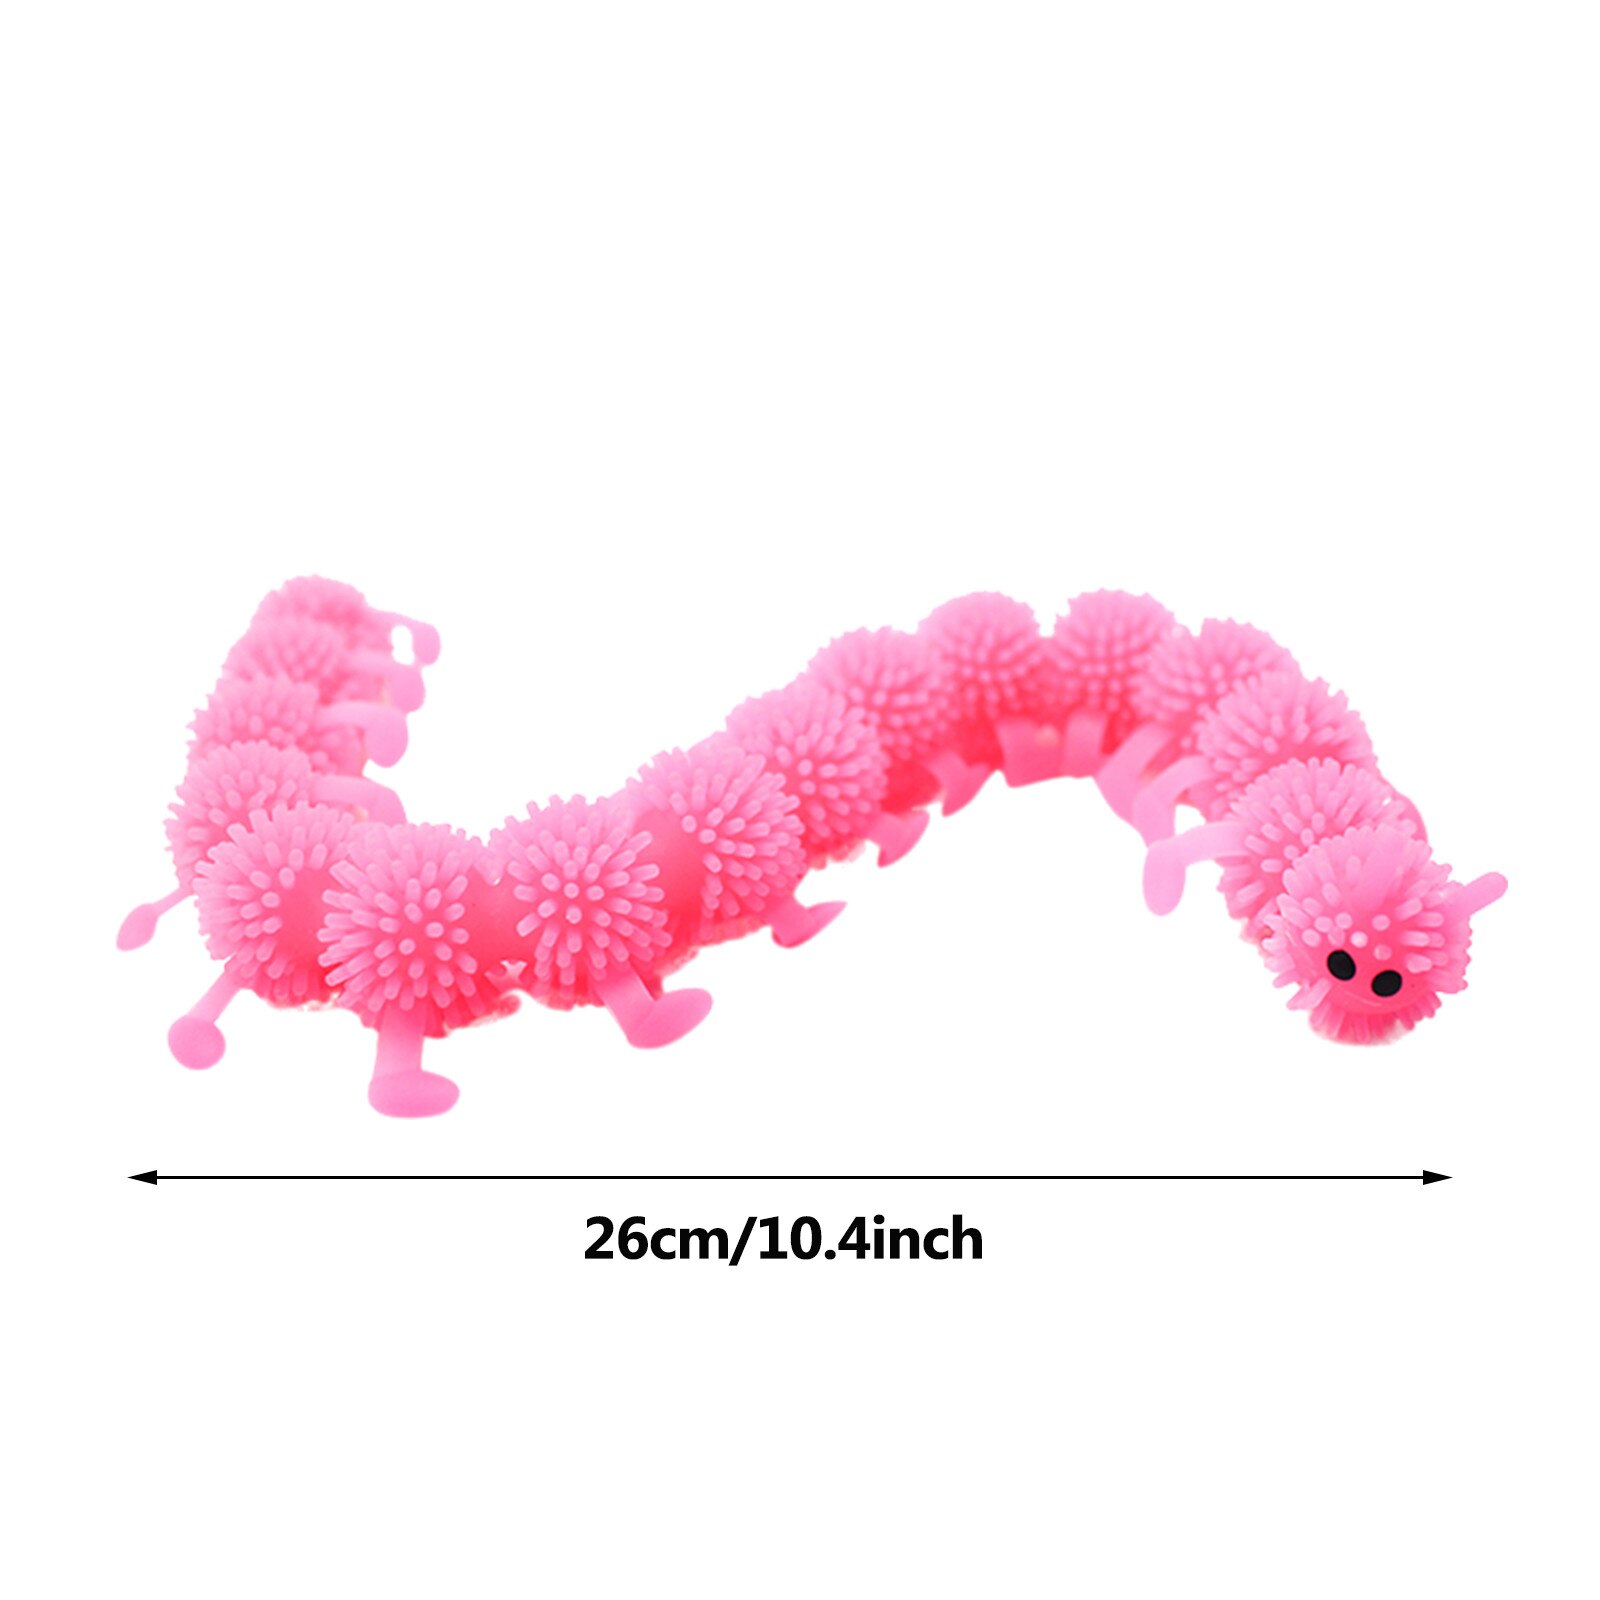 monkey noodle worm stretchy strings fidget toy 7775 - Wacky Track